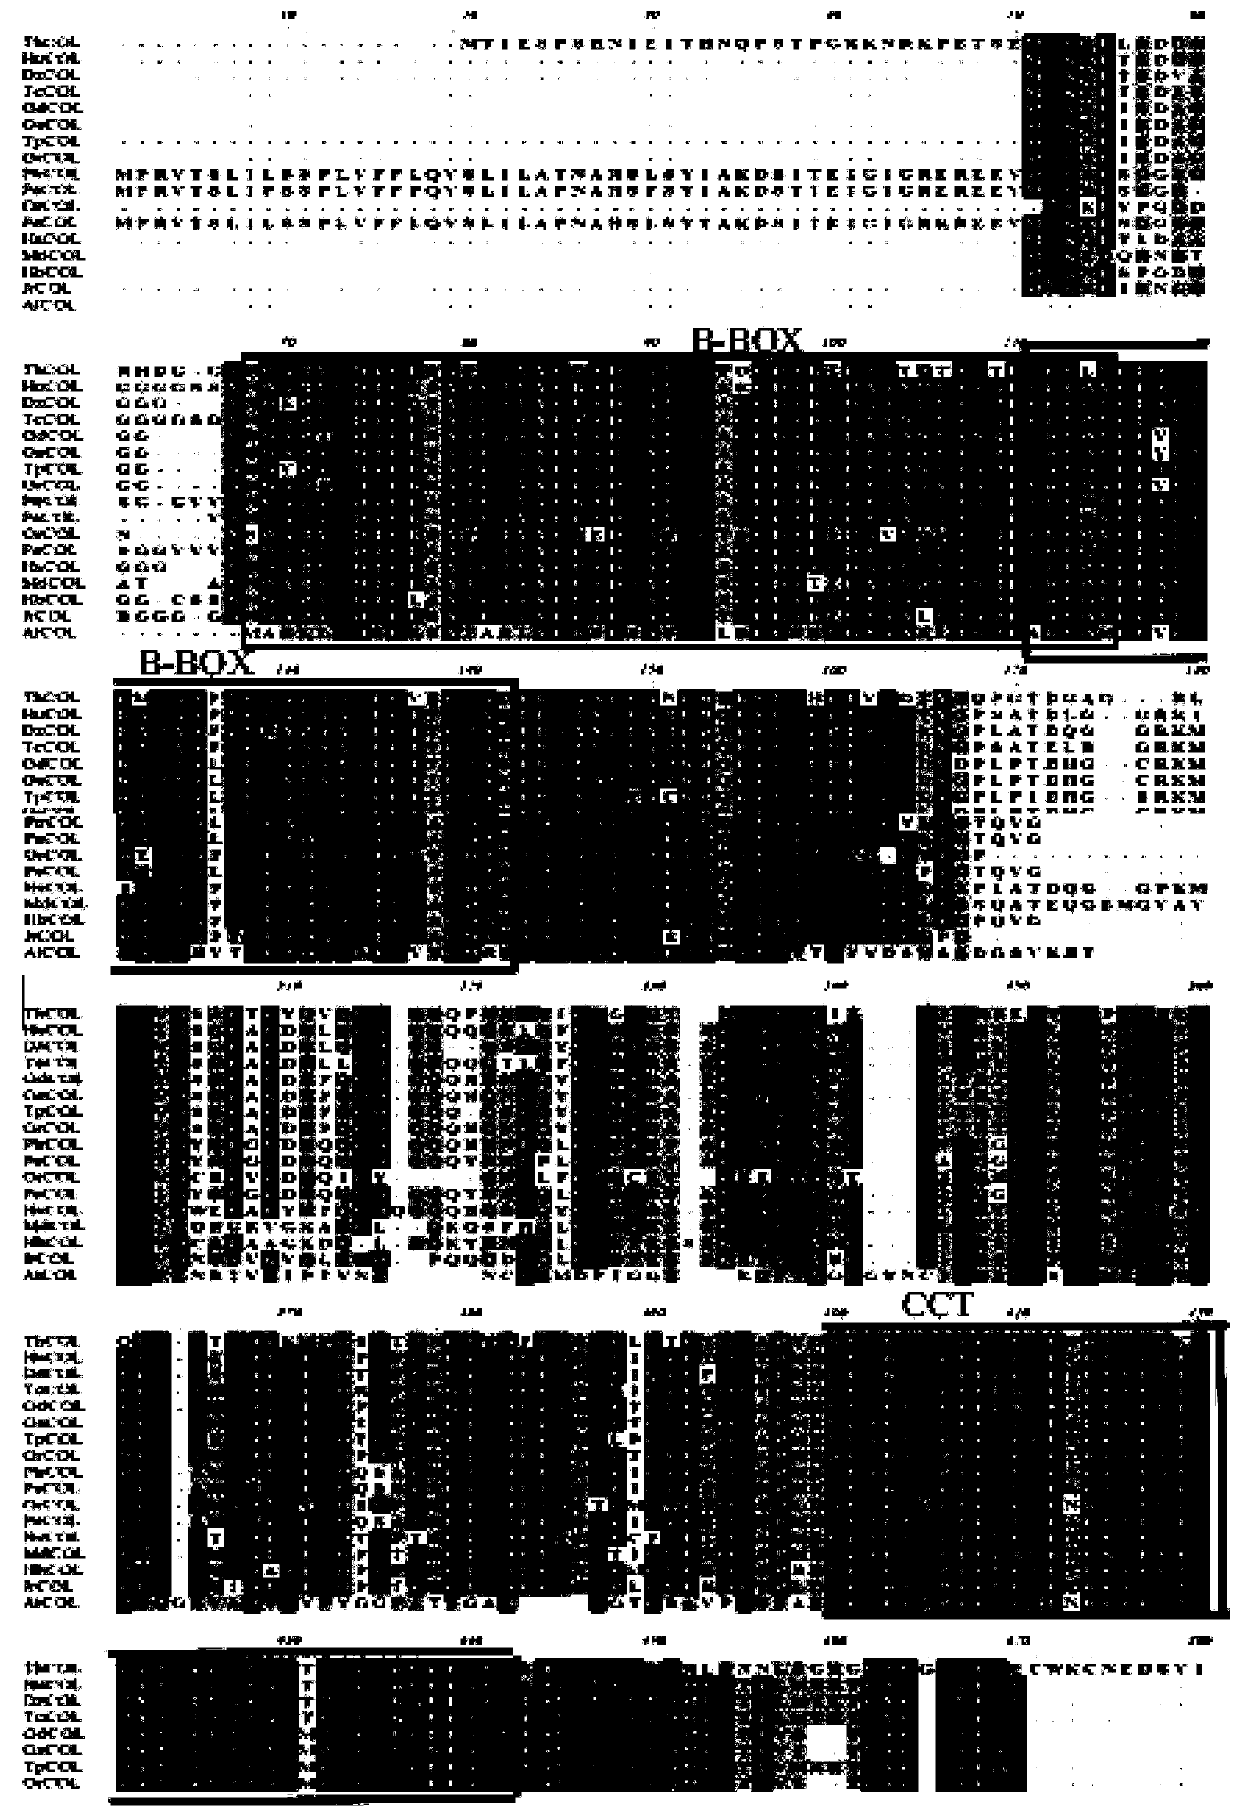 Tamarix hispida COL (Constans-like) transcription factor encoding gene and application thereof